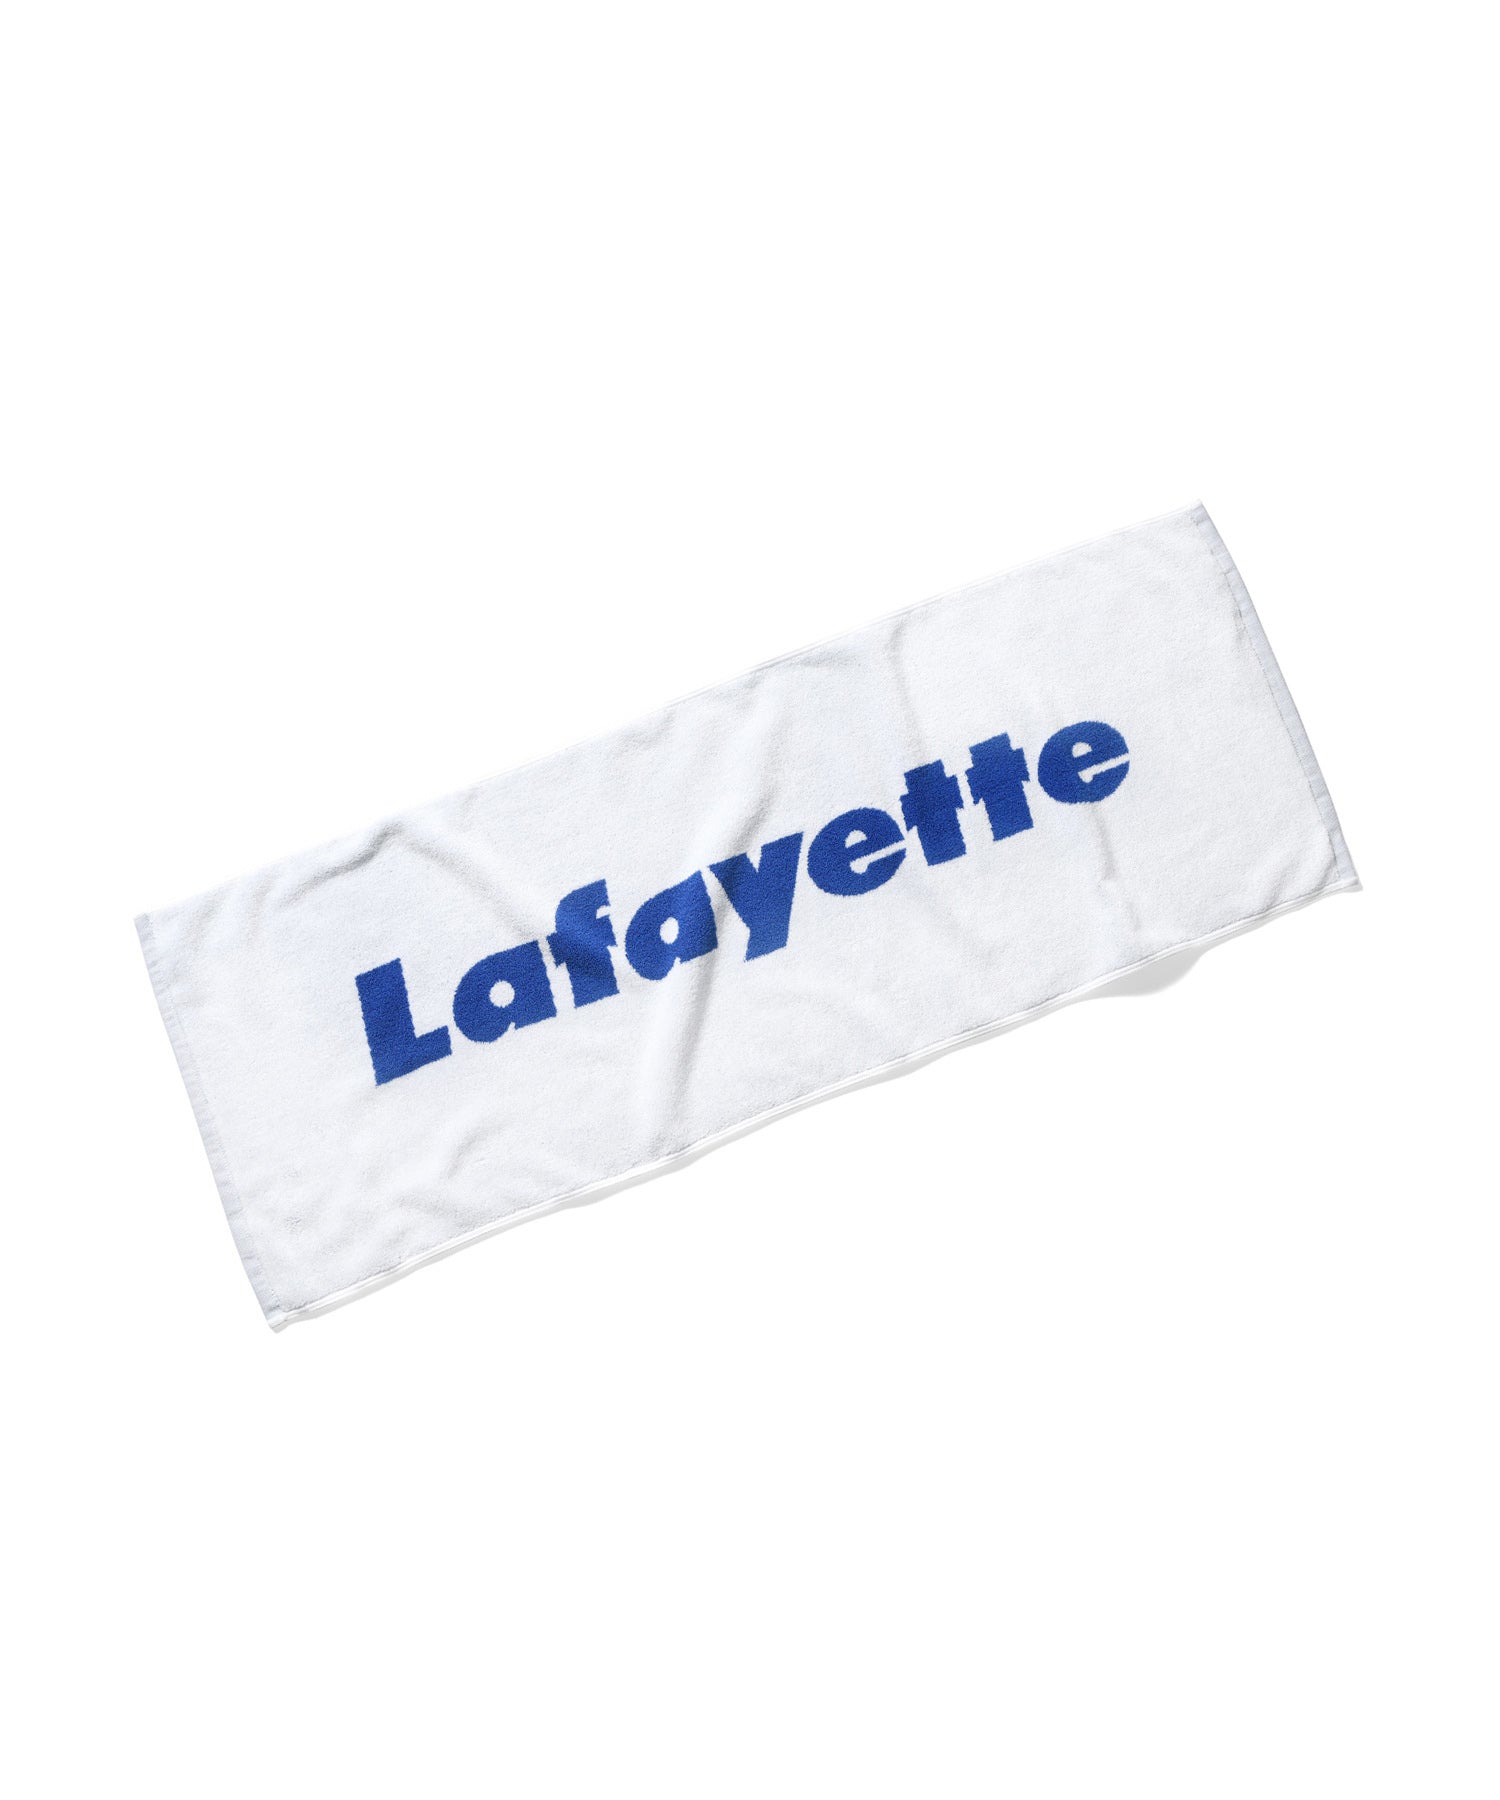 LAFAYETTE LOGO JACQUARD TOWEL LS222201 WHITE